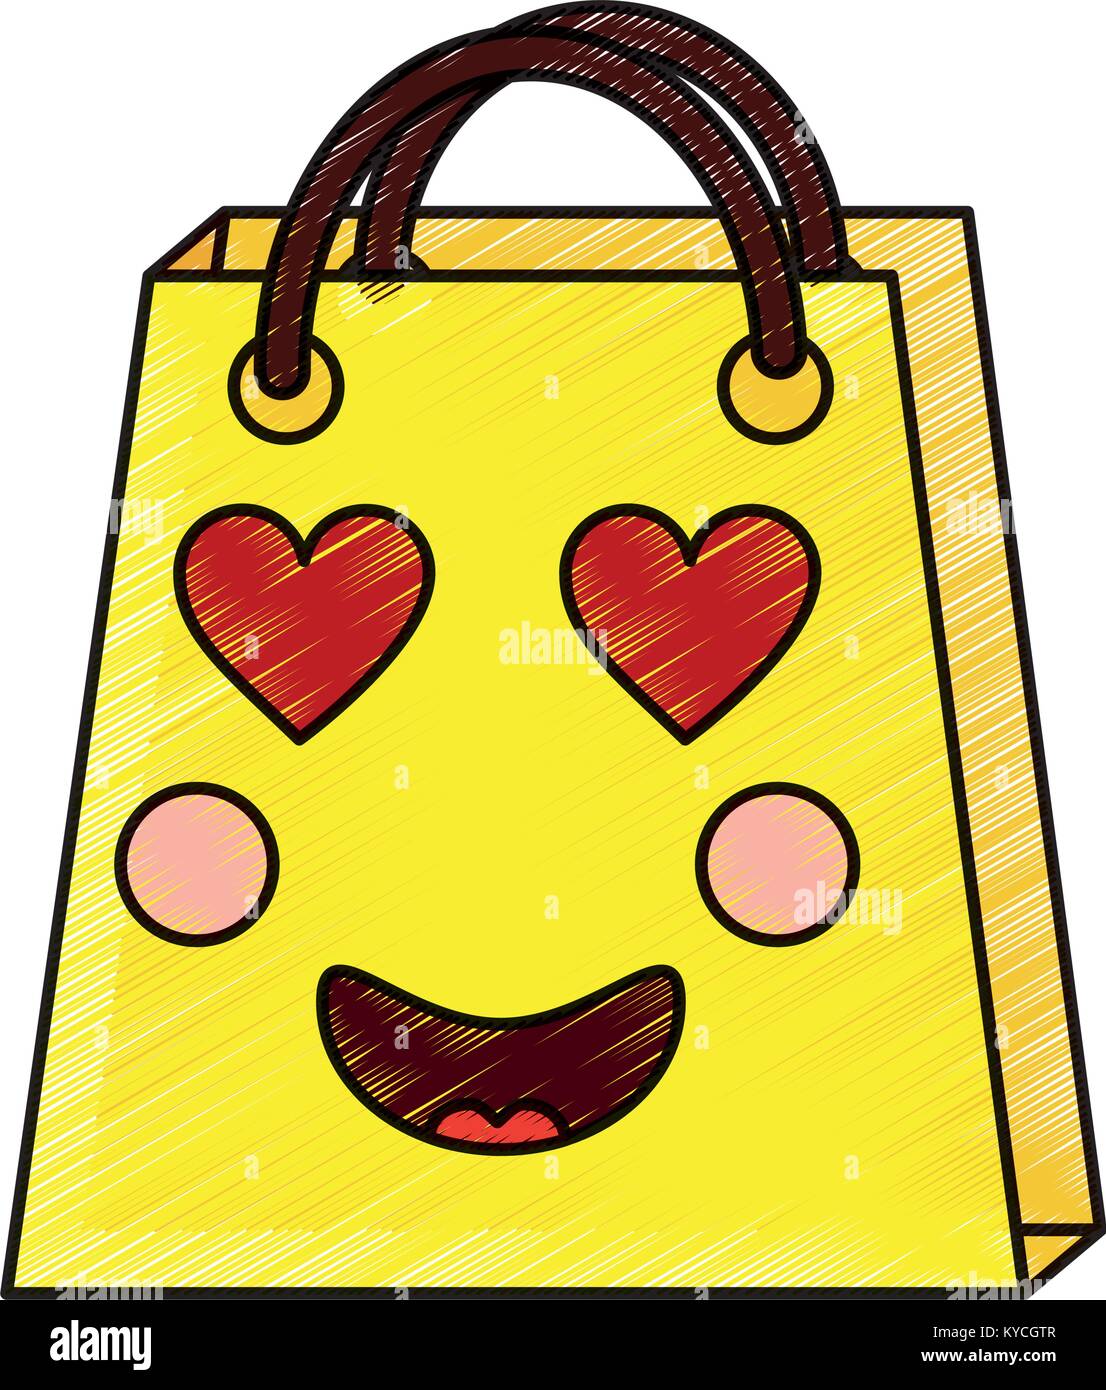 shopping bag character kawaii style vector illustration design drawing  image Stock Vector Image & Art - Alamy